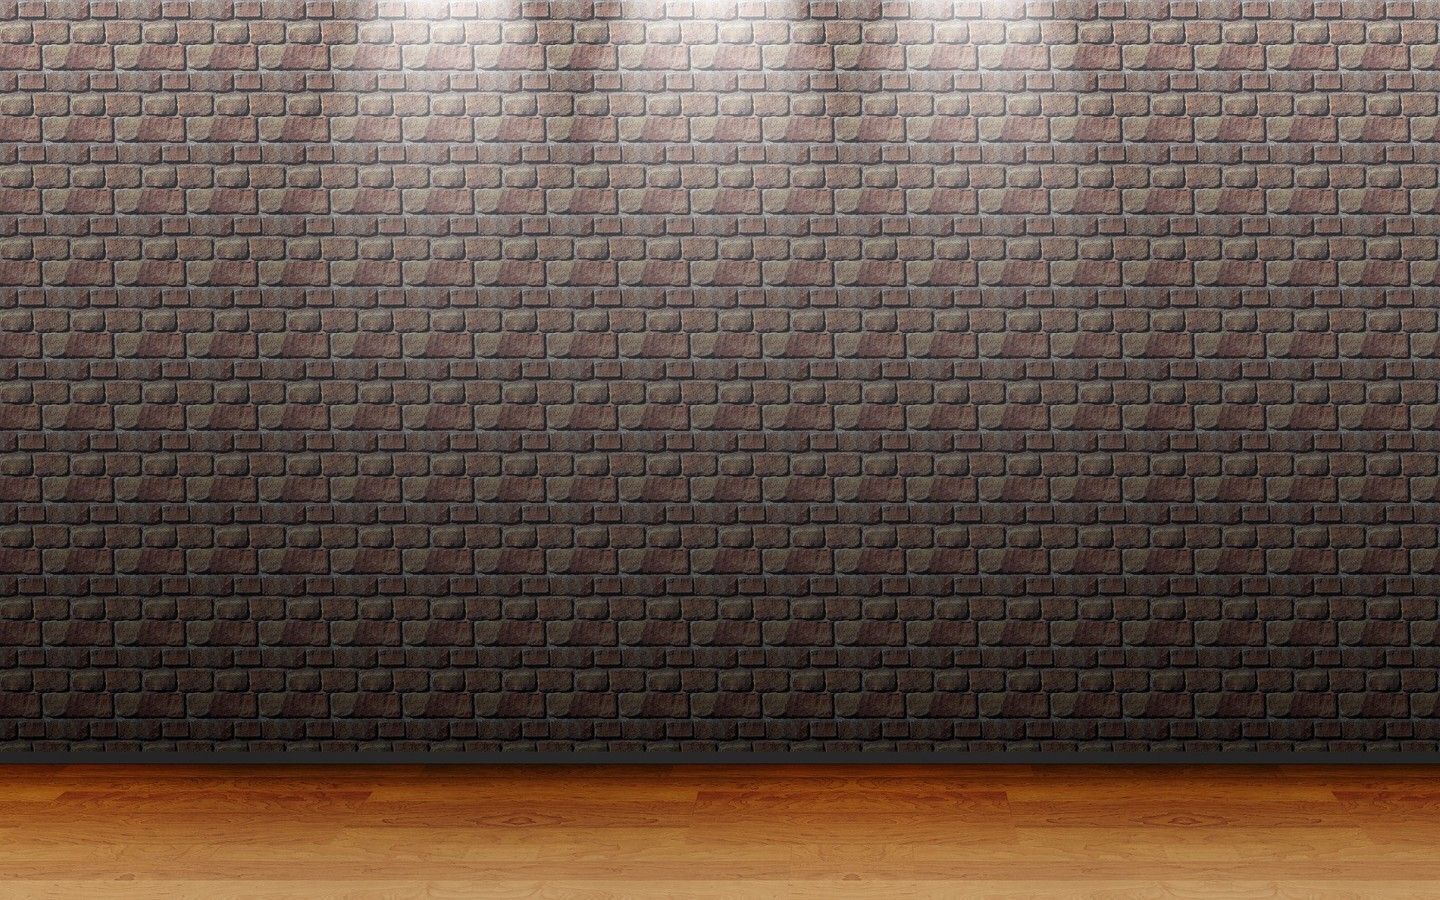 Free download Brick pattern and wood floor Widescreen Wallpaper